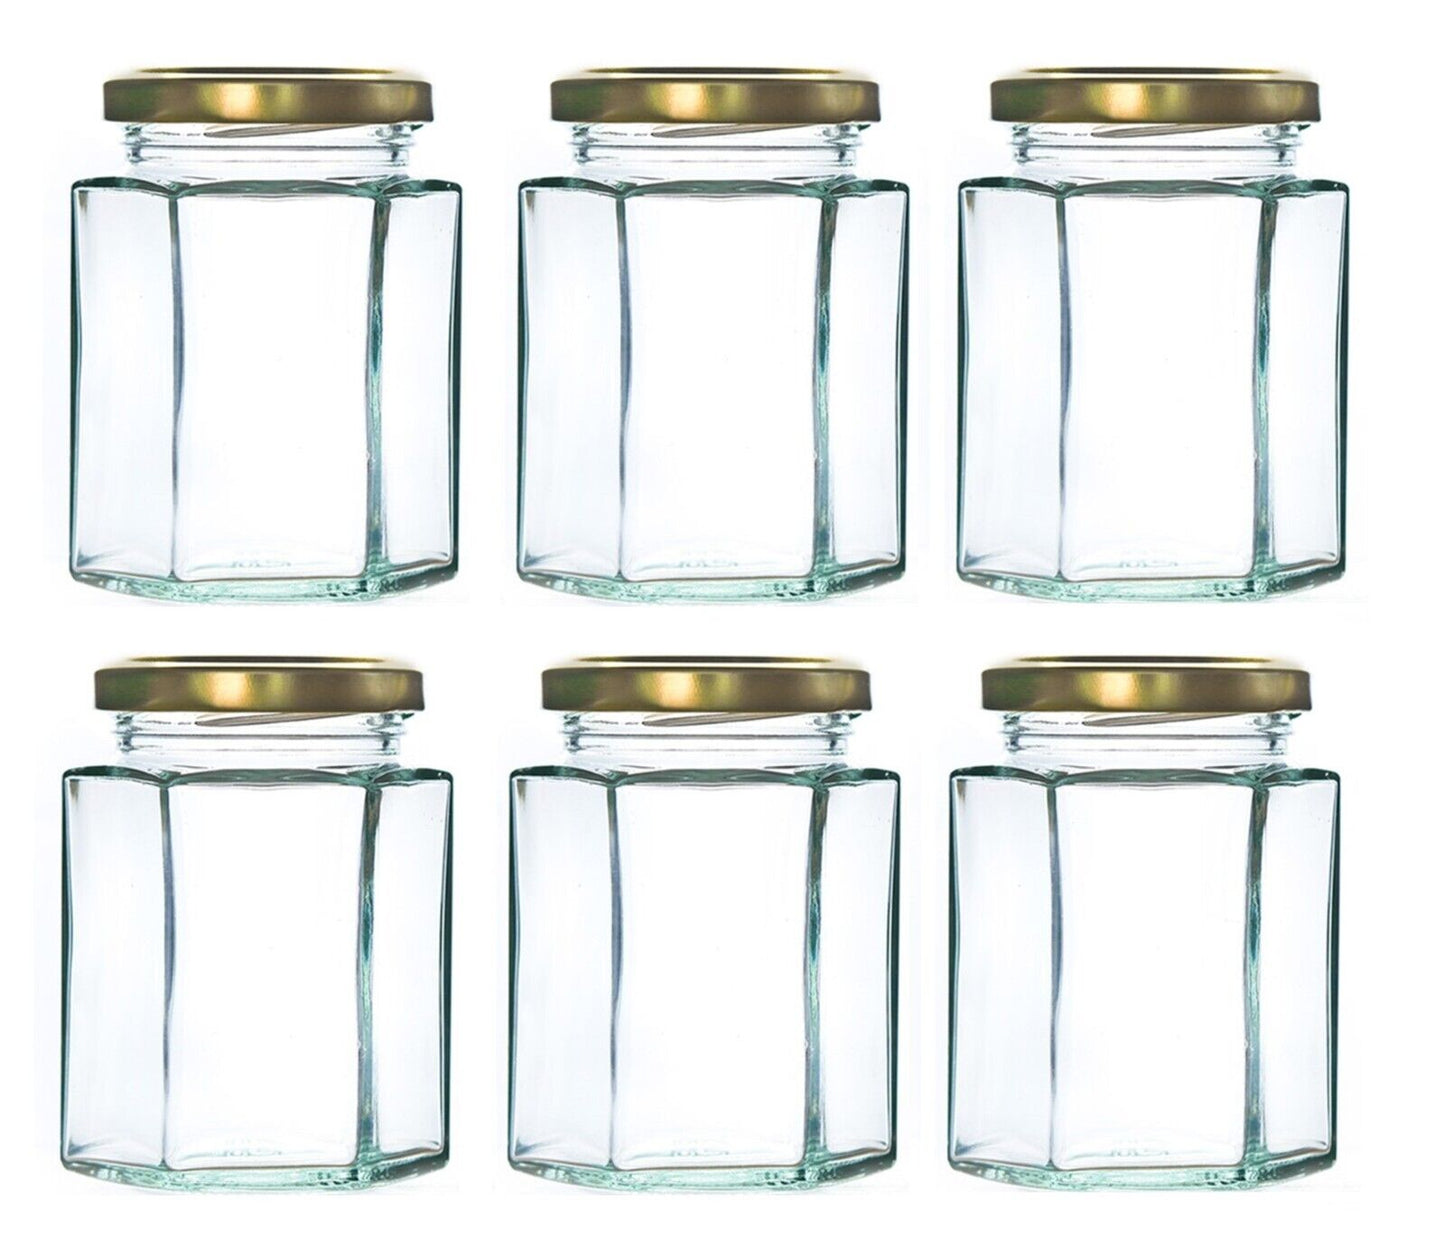 Hexagonal Glass Jam Jars 280ml (340g) Honey Jars with Gold Lid - 6 Pack